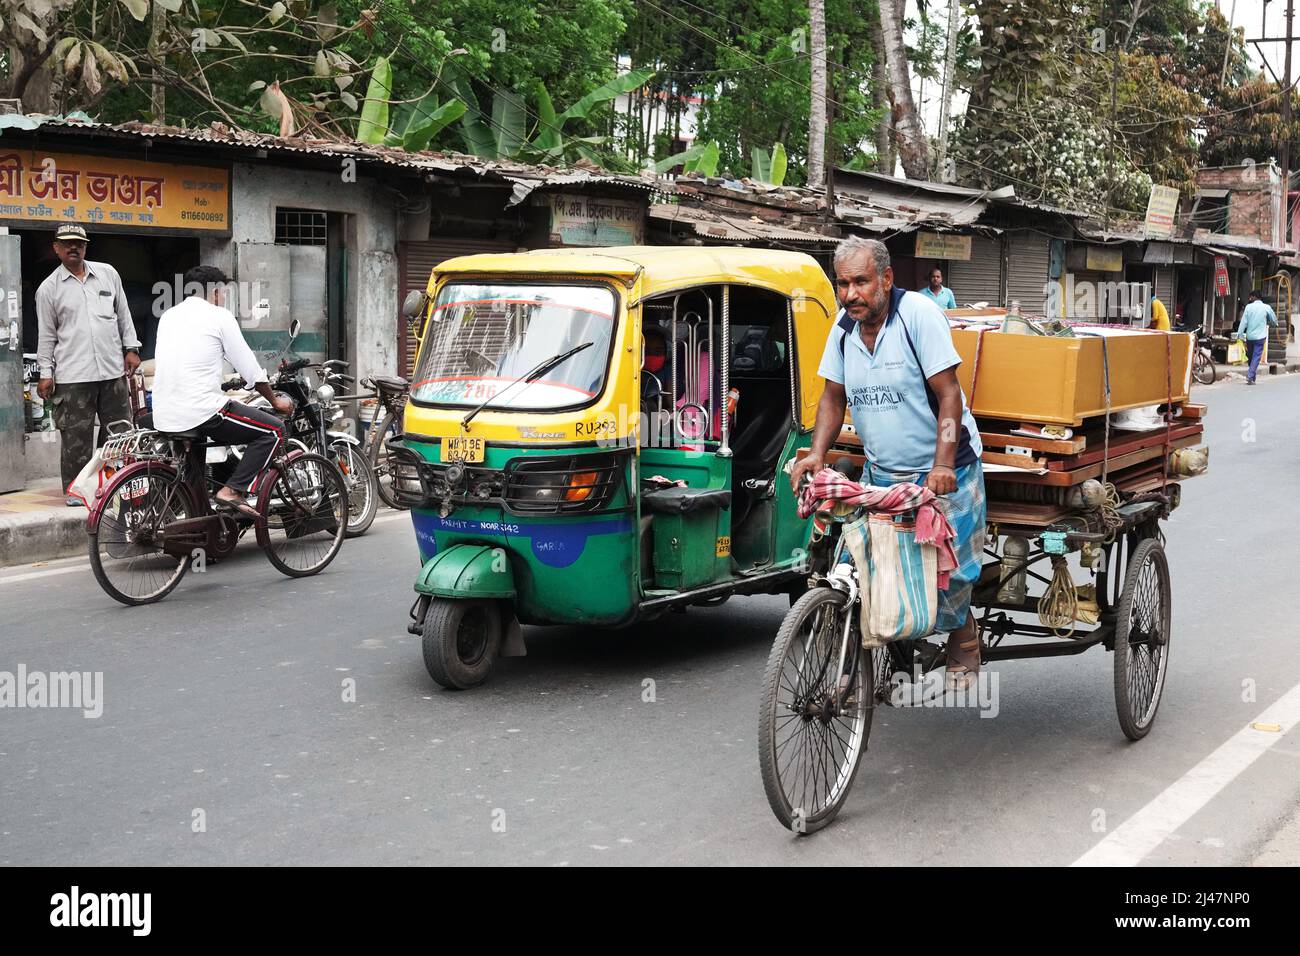 Bicycle, tricycle and rikshaw in Baluijhake/Dhosa village near Kolkata, India Stock Photo